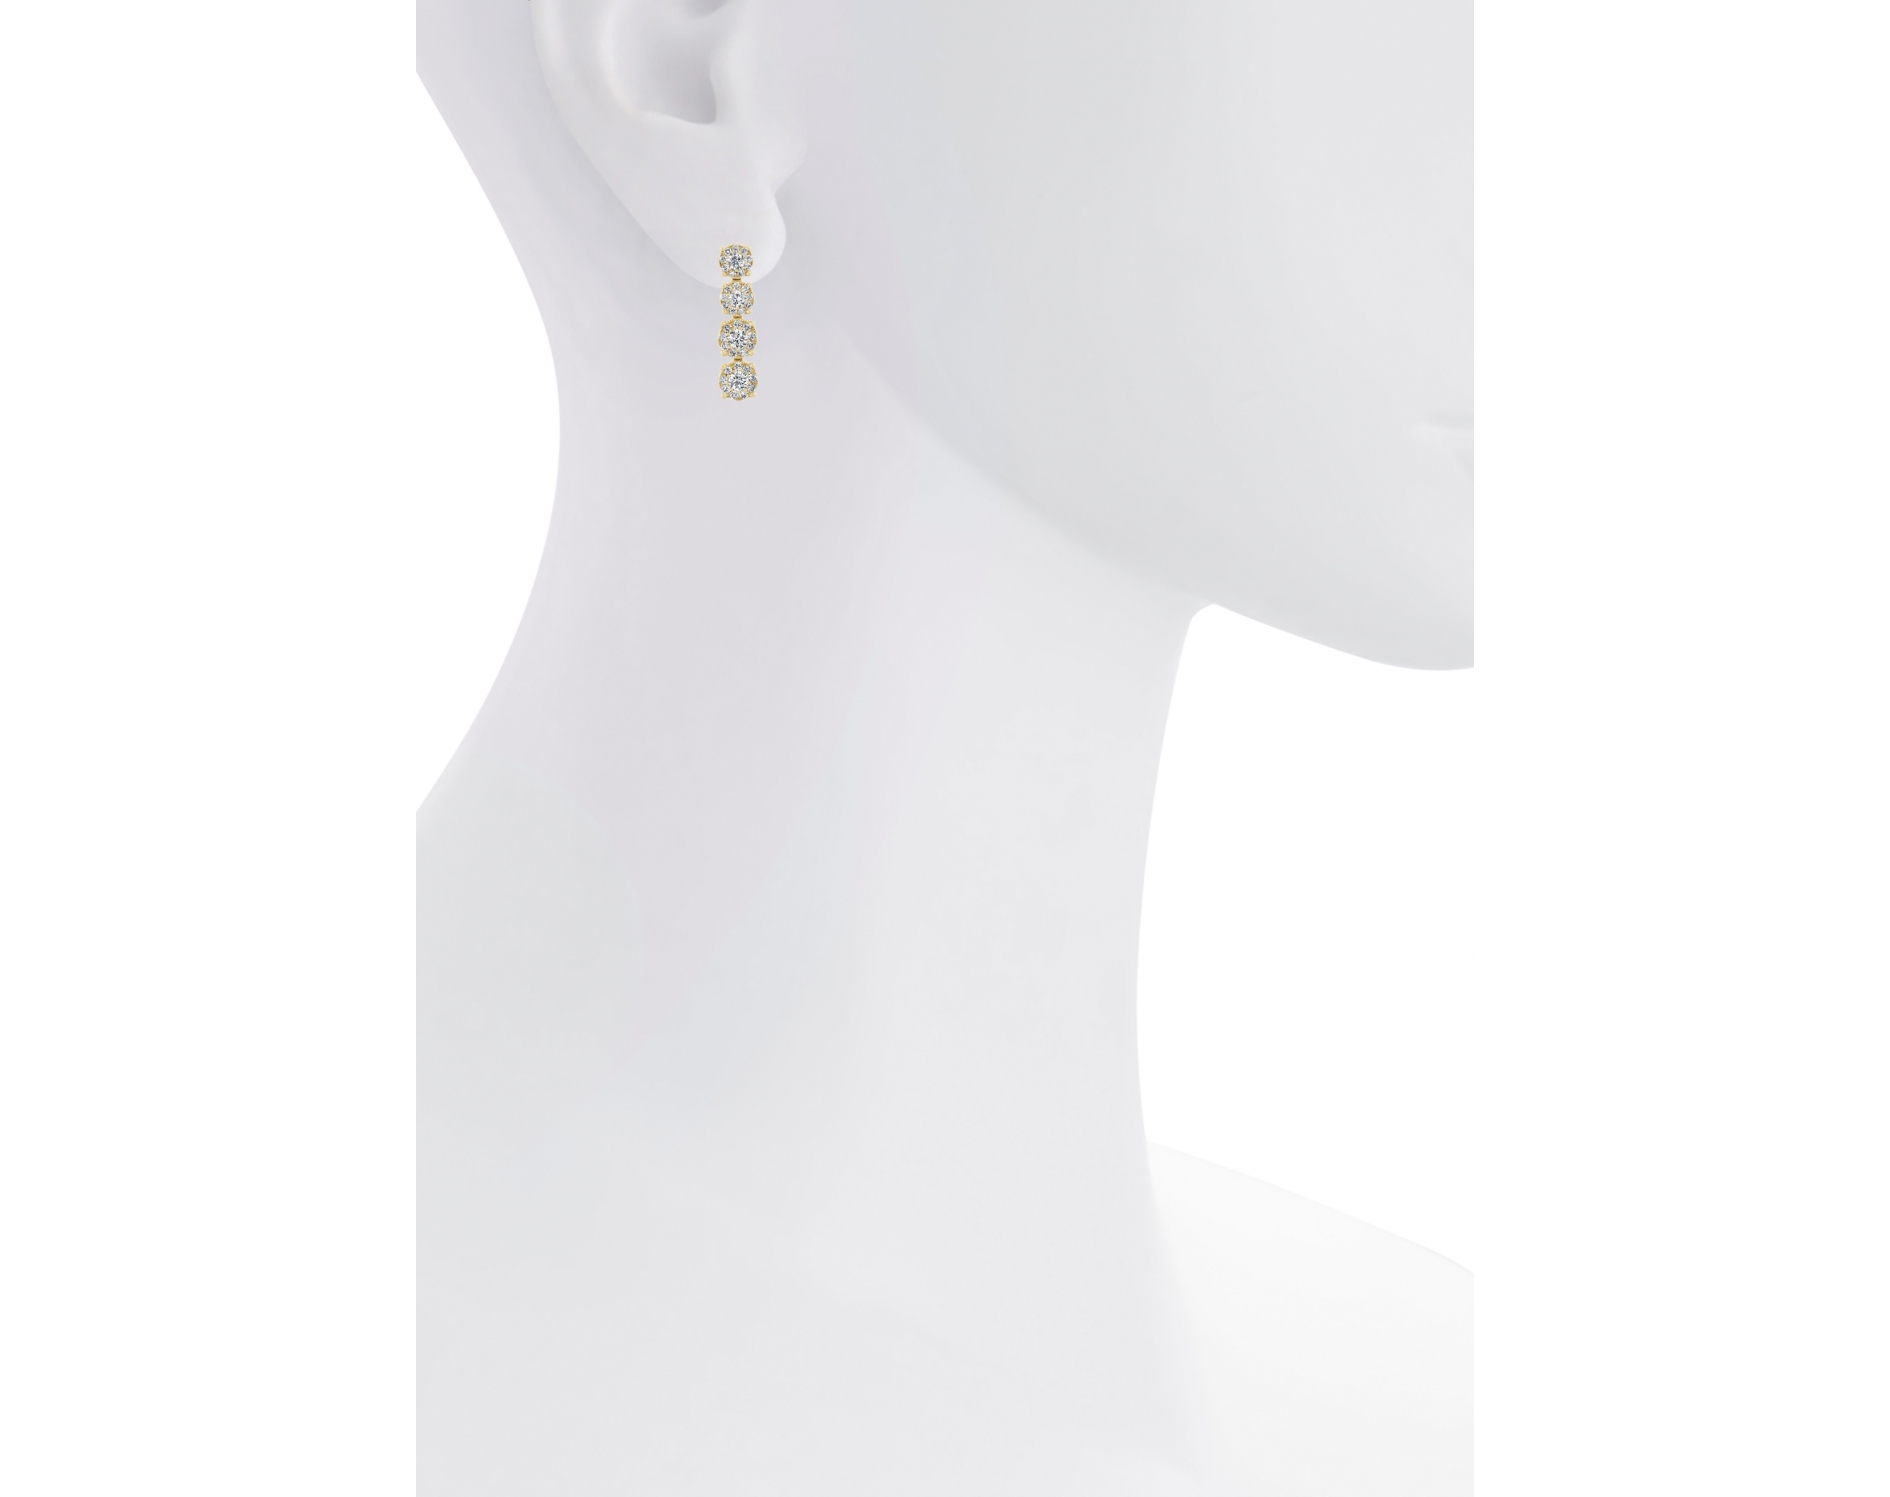 18k yellow gold halo illusion set hanging diamond earrings Photos & images